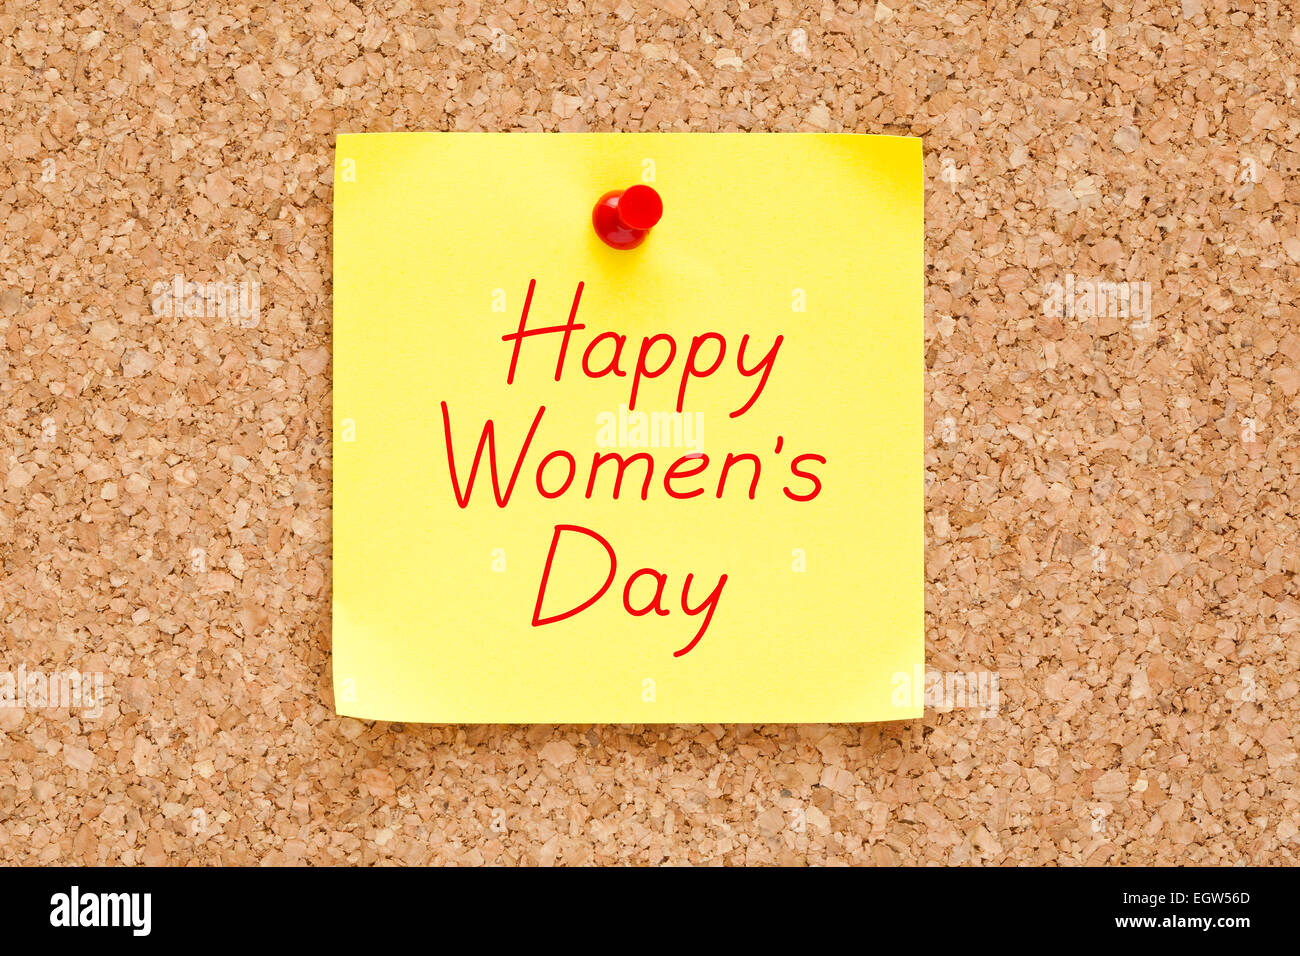 https://c8.alamy.com/comp/EGW56D/happy-womens-day-written-on-a-sticky-note-pinned-on-a-cork-bulletin-EGW56D.jpg